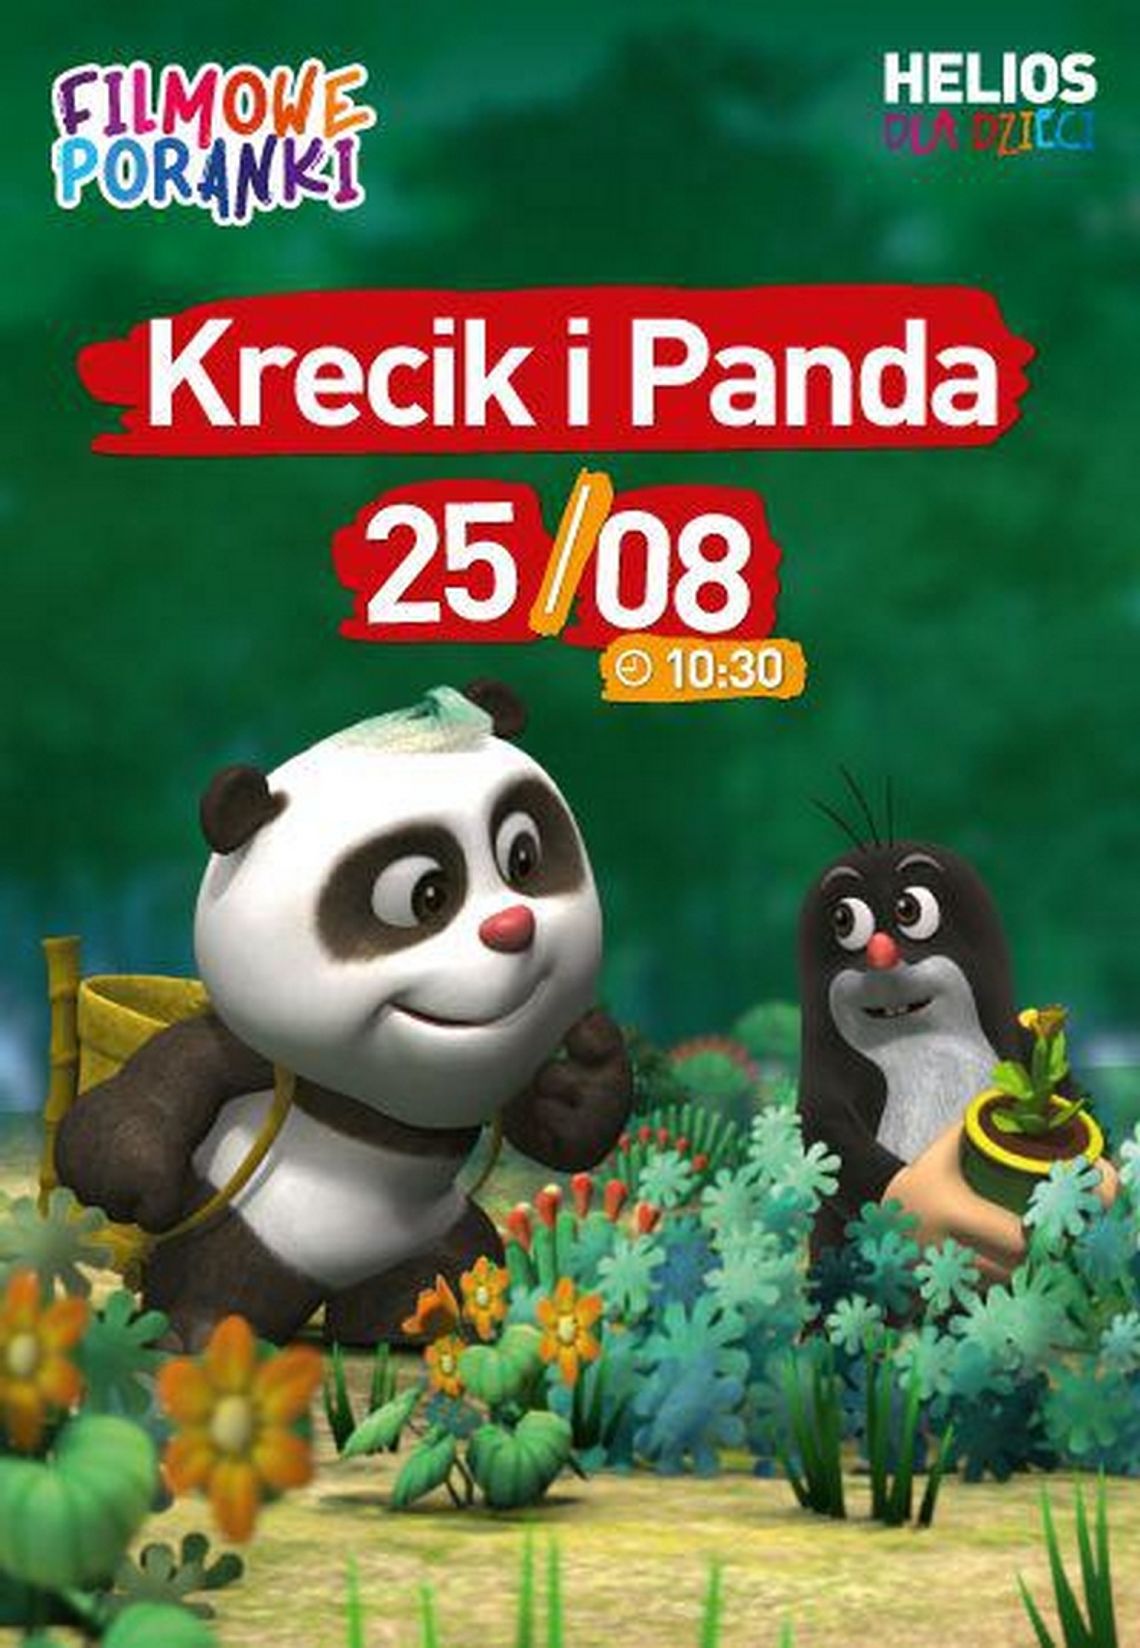 Filmowe Poranki: Krecik i Panda, cz. 6